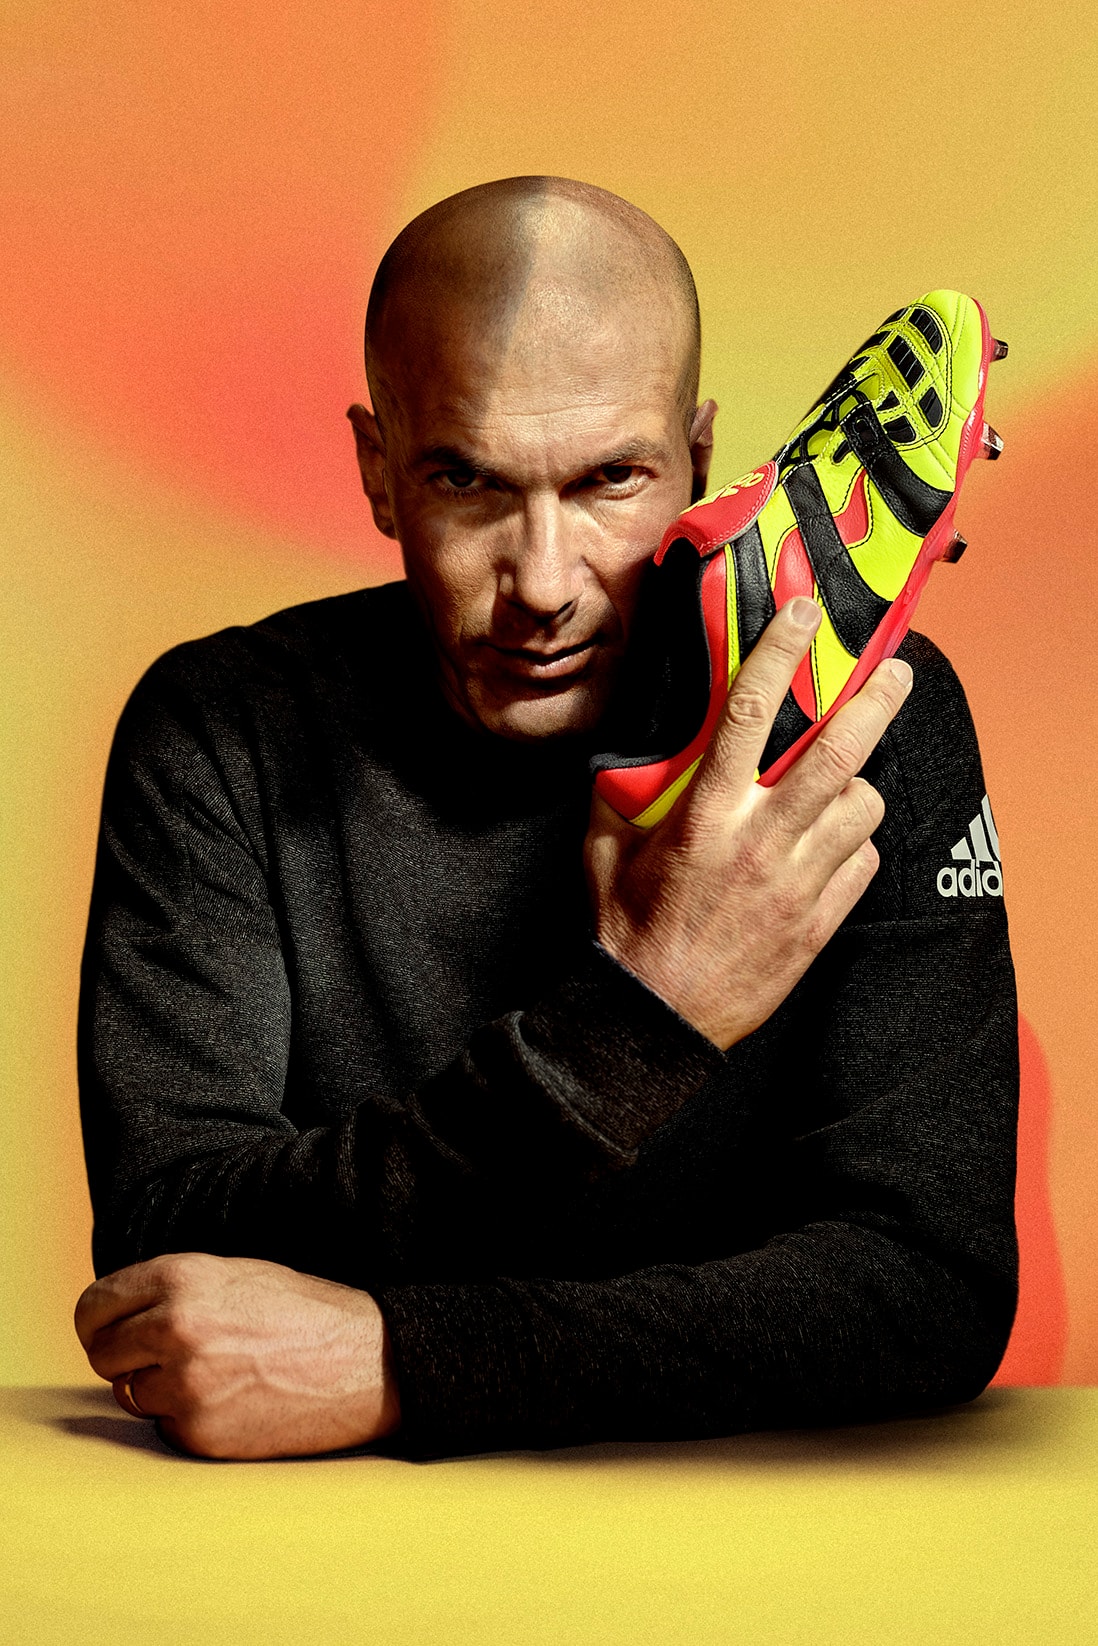 adidas David Beckham Zinedine Zidane Predator Accelerator Release Details Cop Purchase Buy Kicks Shoes Trainers Boots Footwear 2018 FIFA World Cup